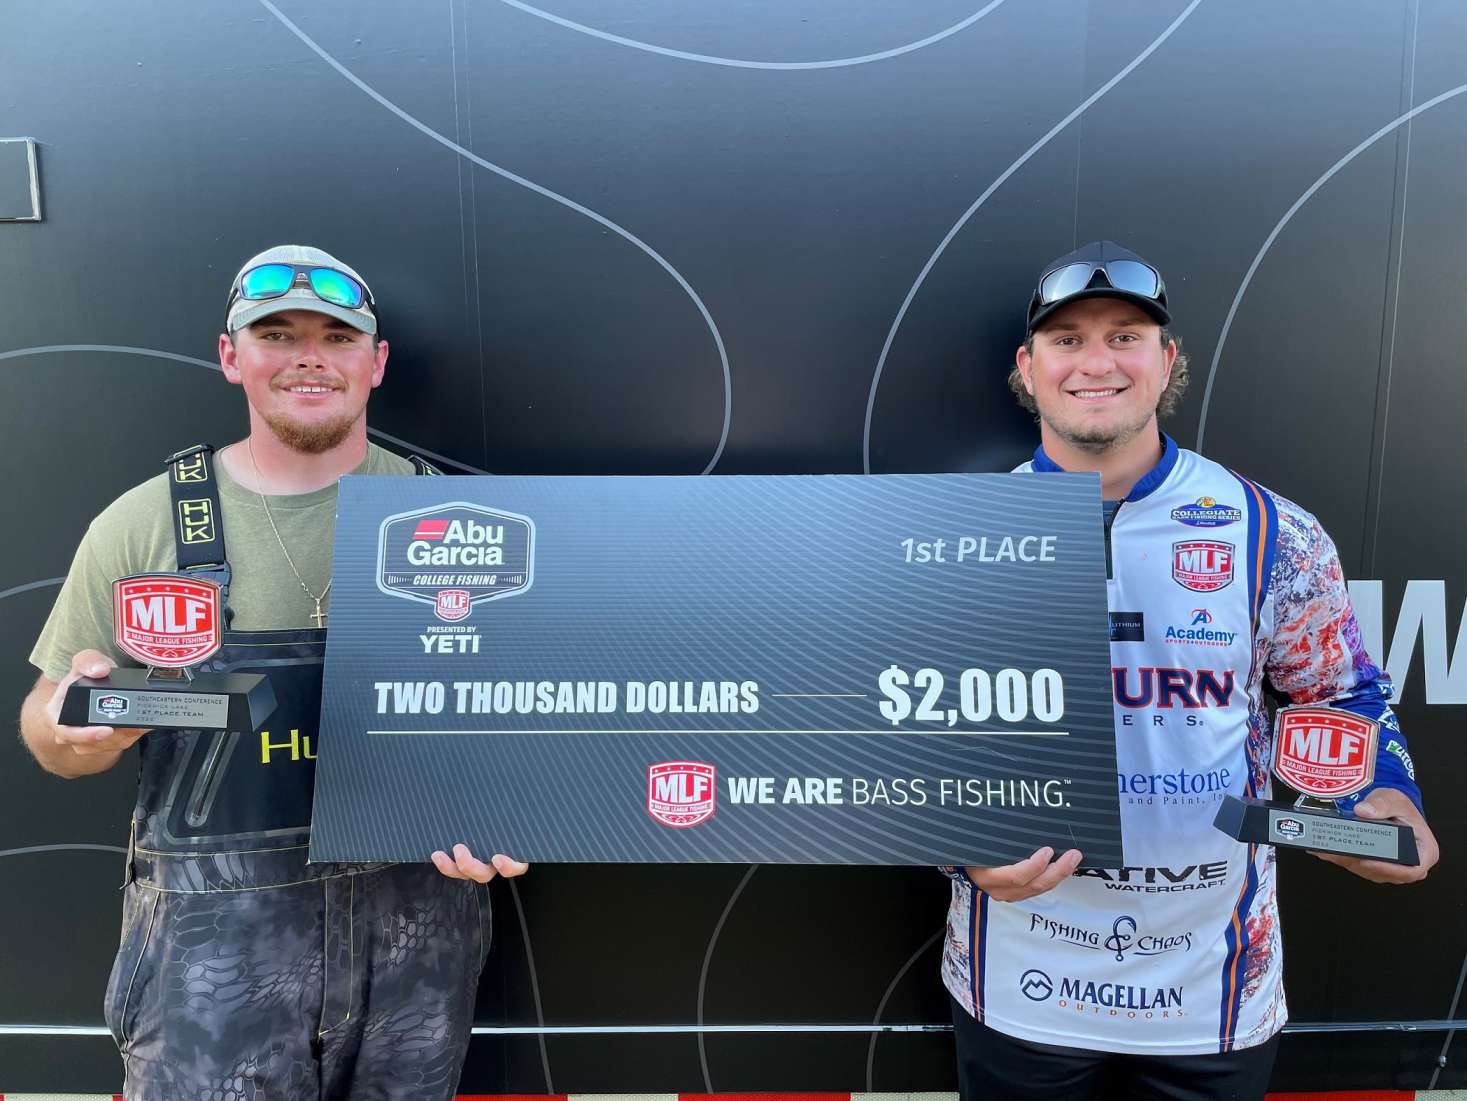 Blake Milligan of Auburn, Alabama, and Matthew Parrish of Decatur, Alabama, won the MLF Abu Garcia College Fishing event on Pickwick Lake weighing 18 pounds, 7 ounces.